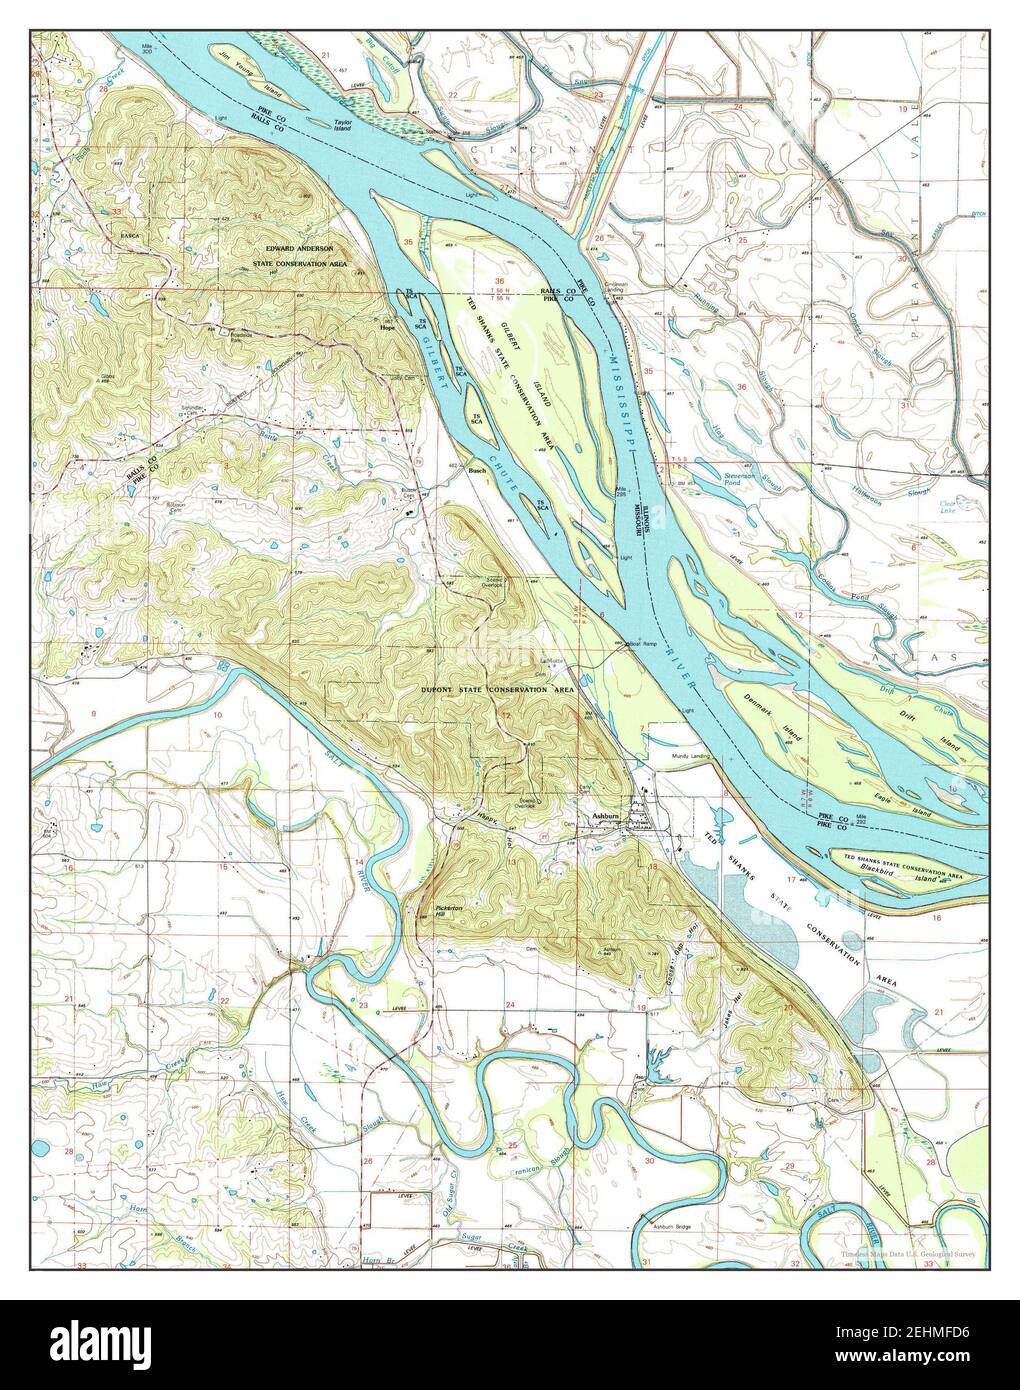 Ashburn, Missouri, map 1993, 1:24000, United States of America by Timeless Maps, data U.S. Geological Survey Stock Photo